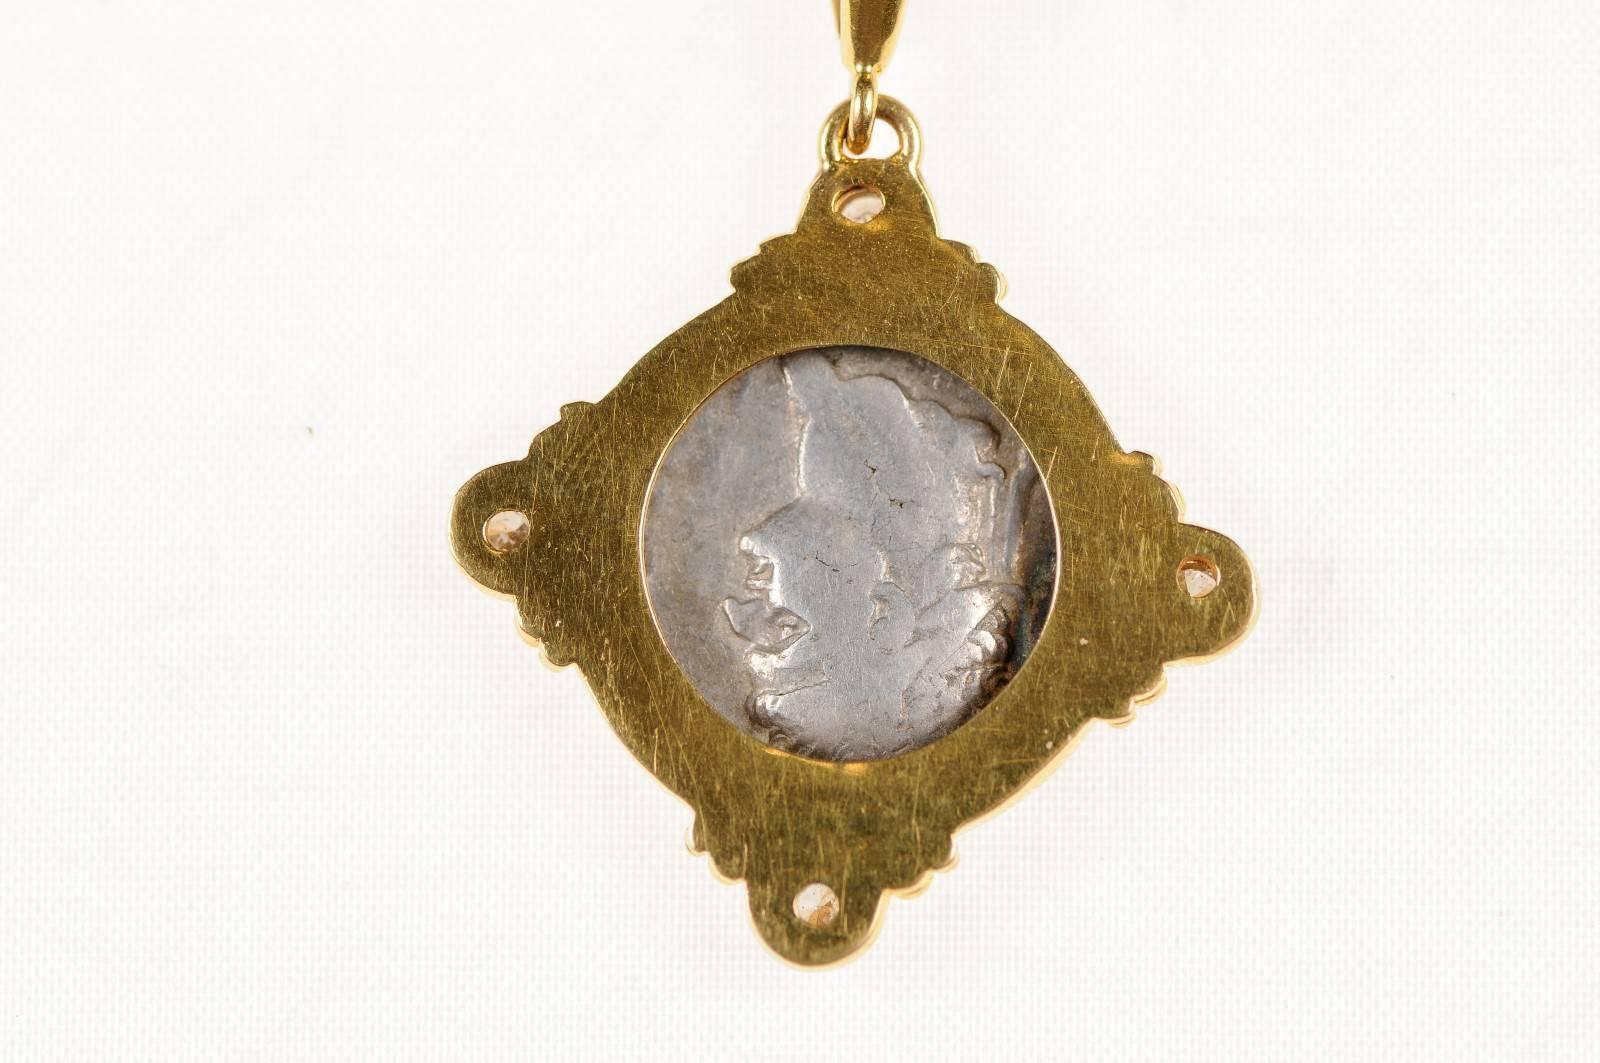 Roman Empire Domitian Coin circa 81-96 AD Set in Gold with Diamond Accents For Sale 1